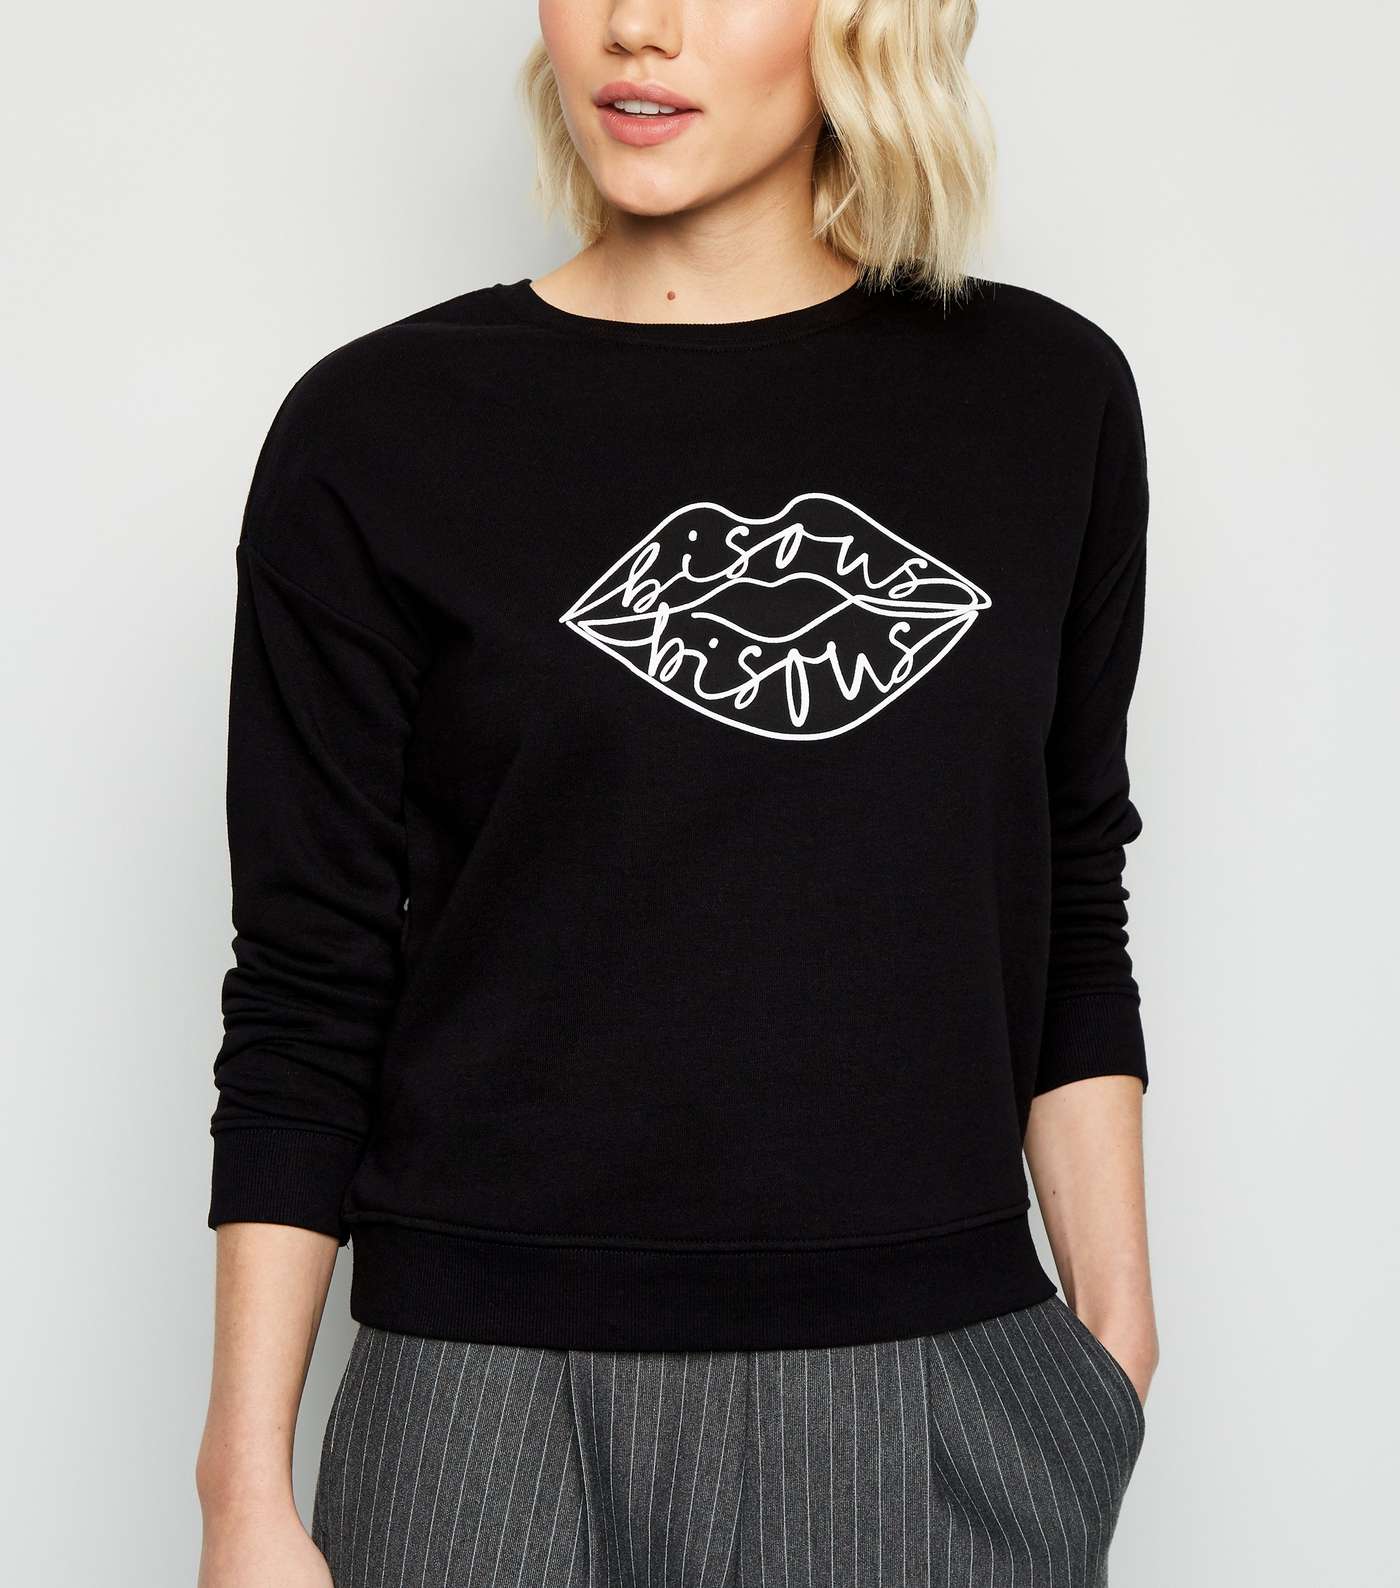 Petite Black Sketch Slogan Sweatshirt